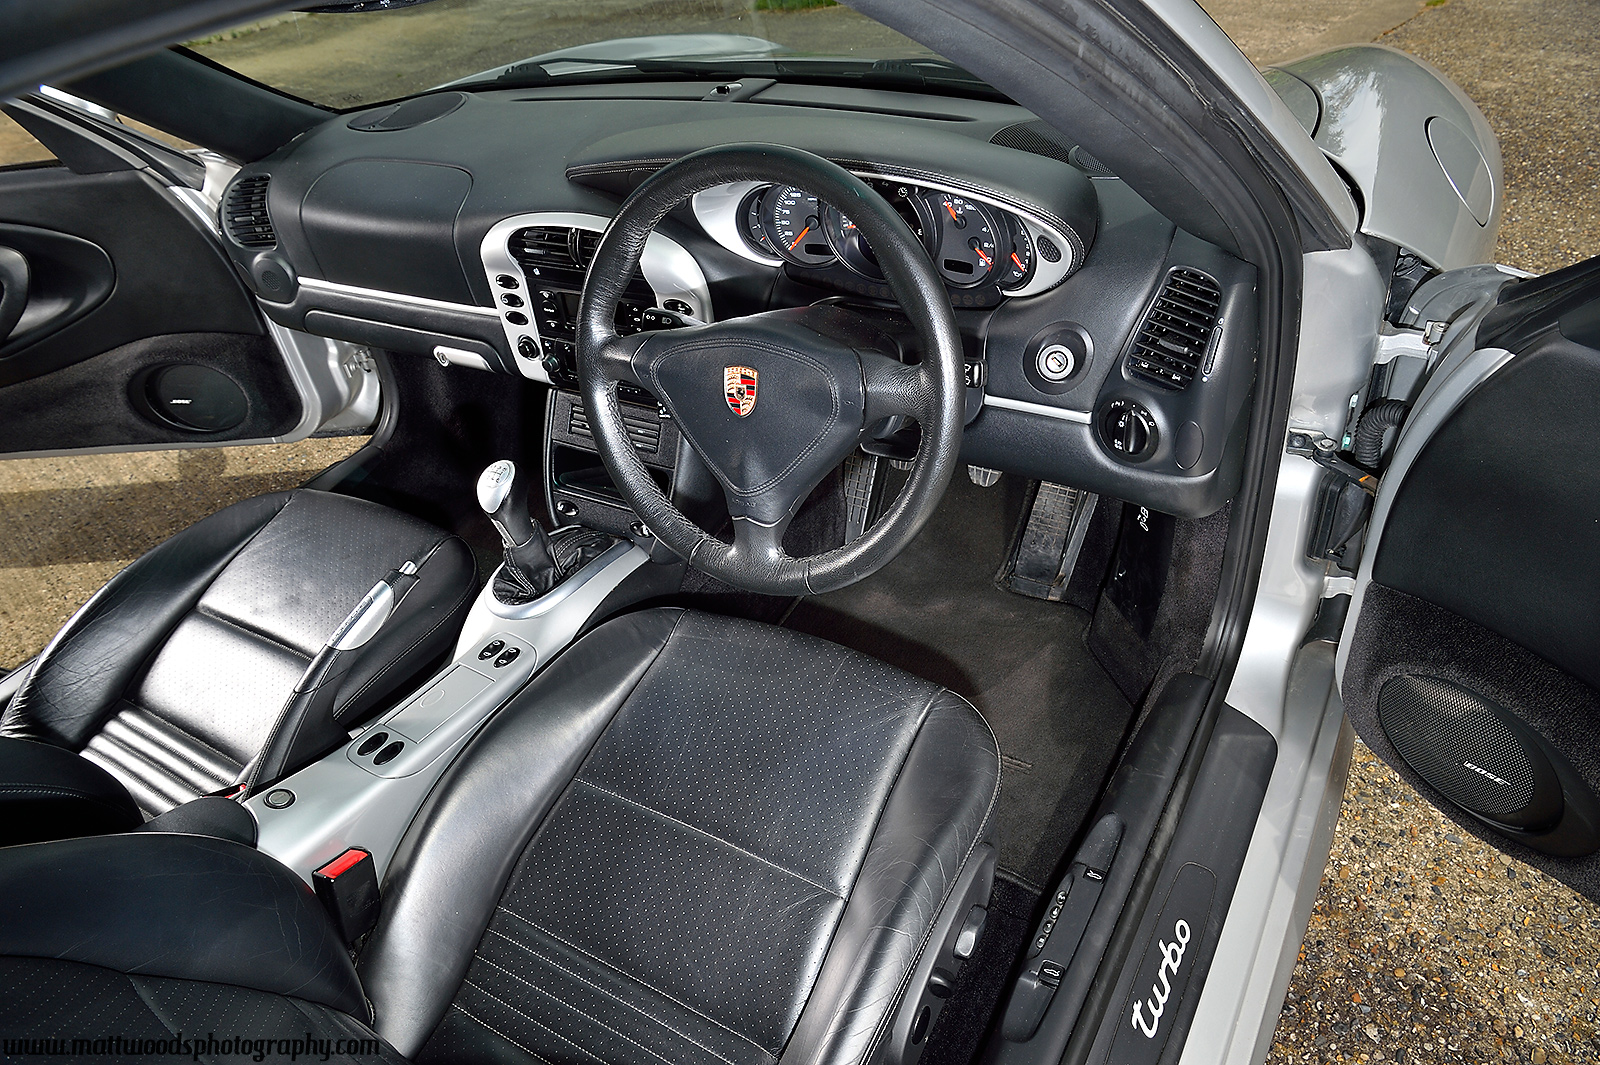 Inside the Porsche 996 Turbo